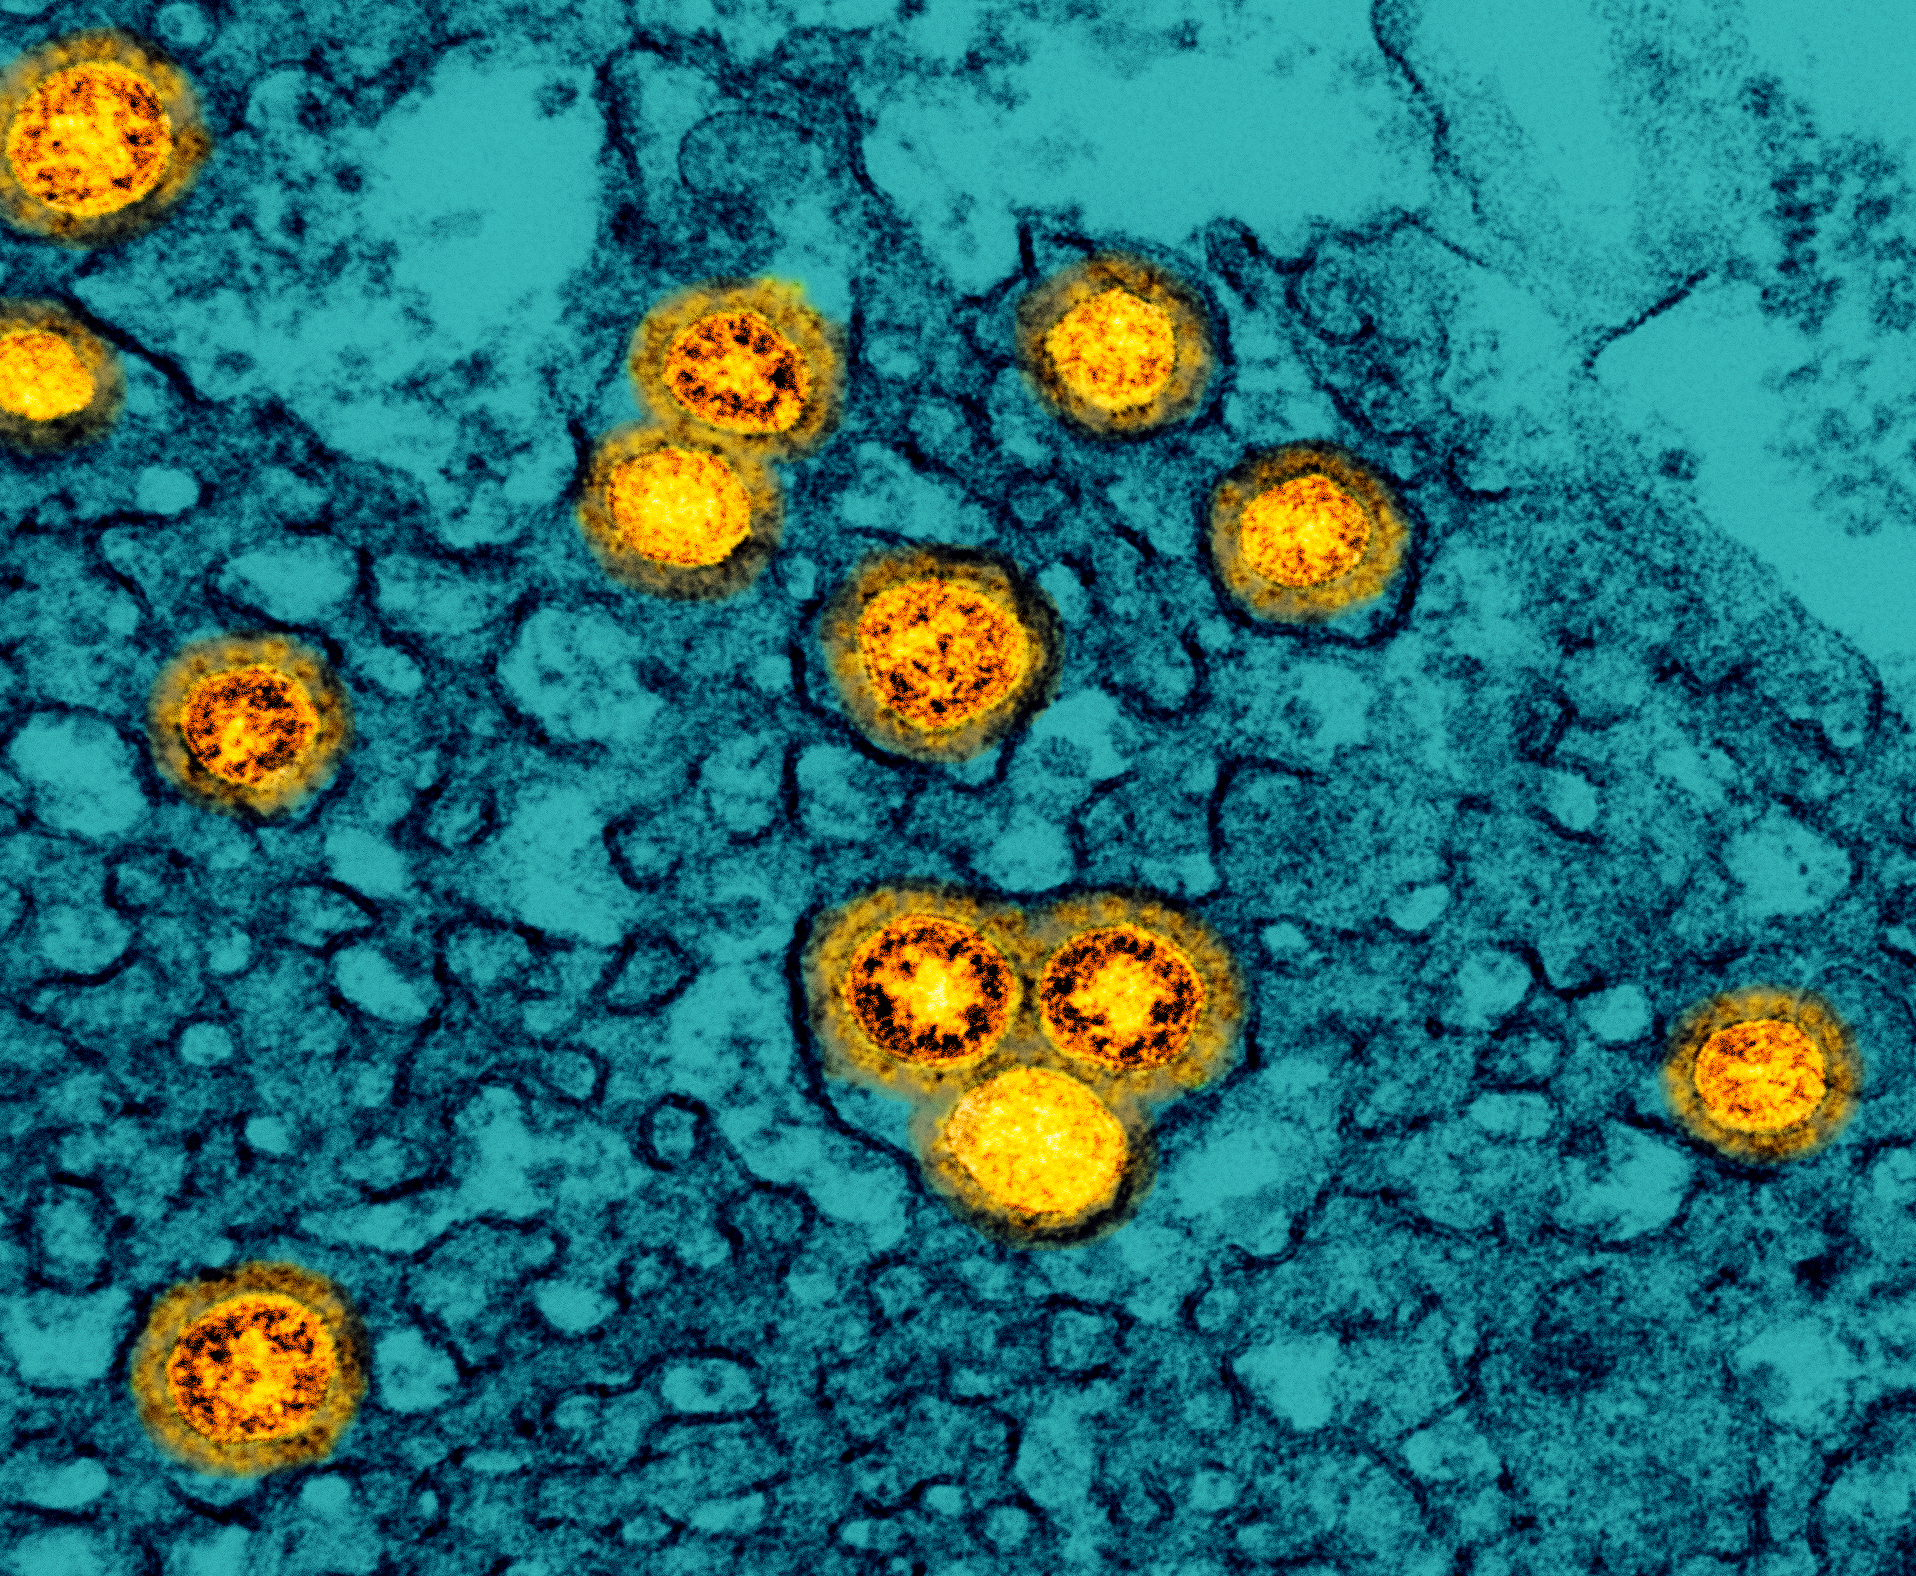 Omicron seen as milder coronavirus but scientists aren't sure